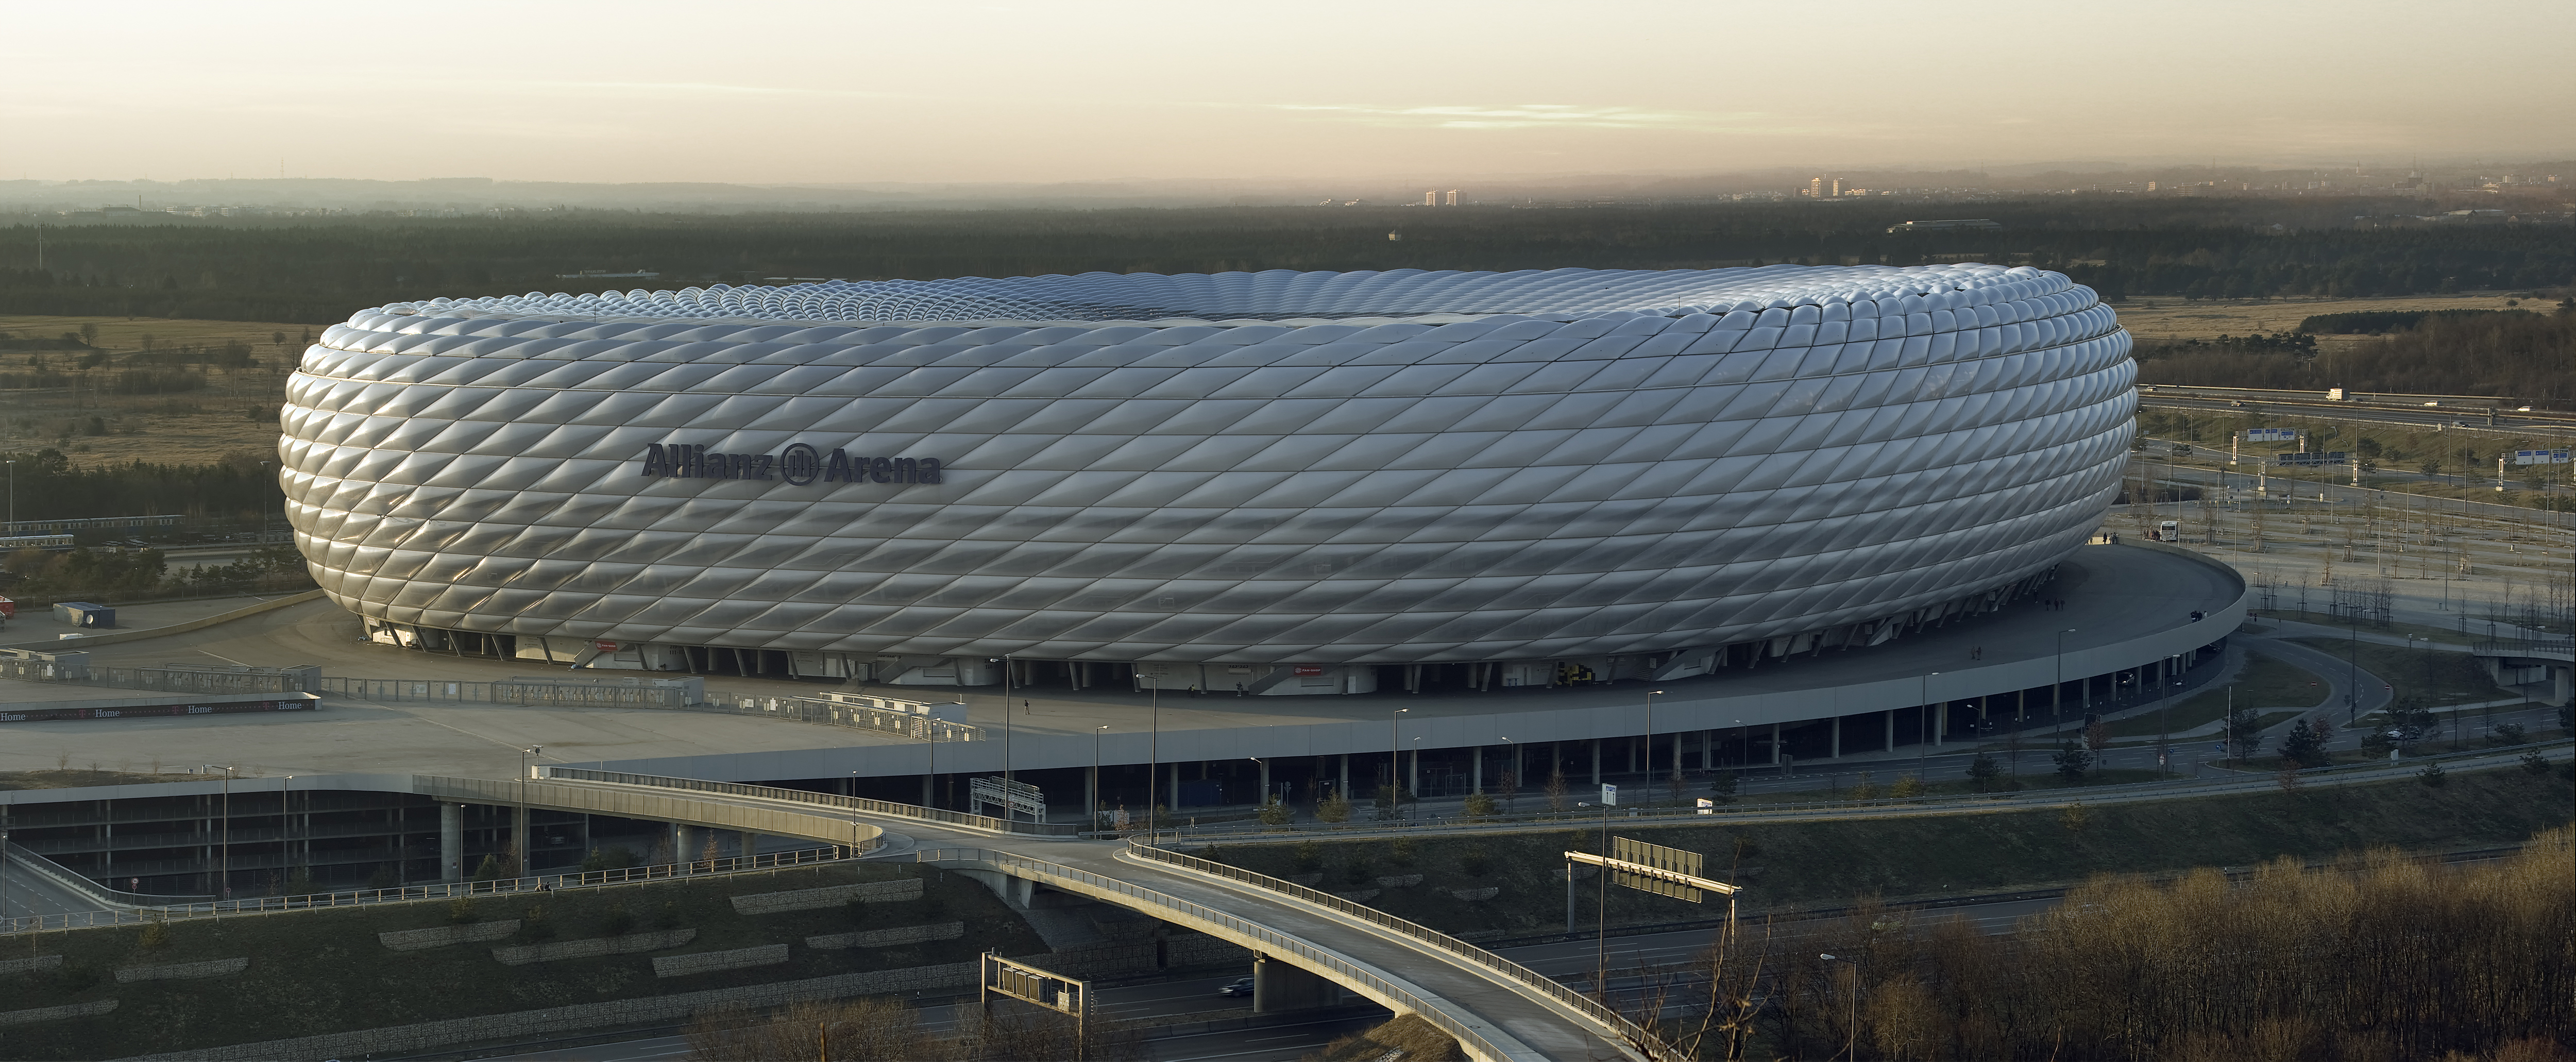 File:Allianz arena daylight Richard Bartz.jpg - Wikimedia Commons